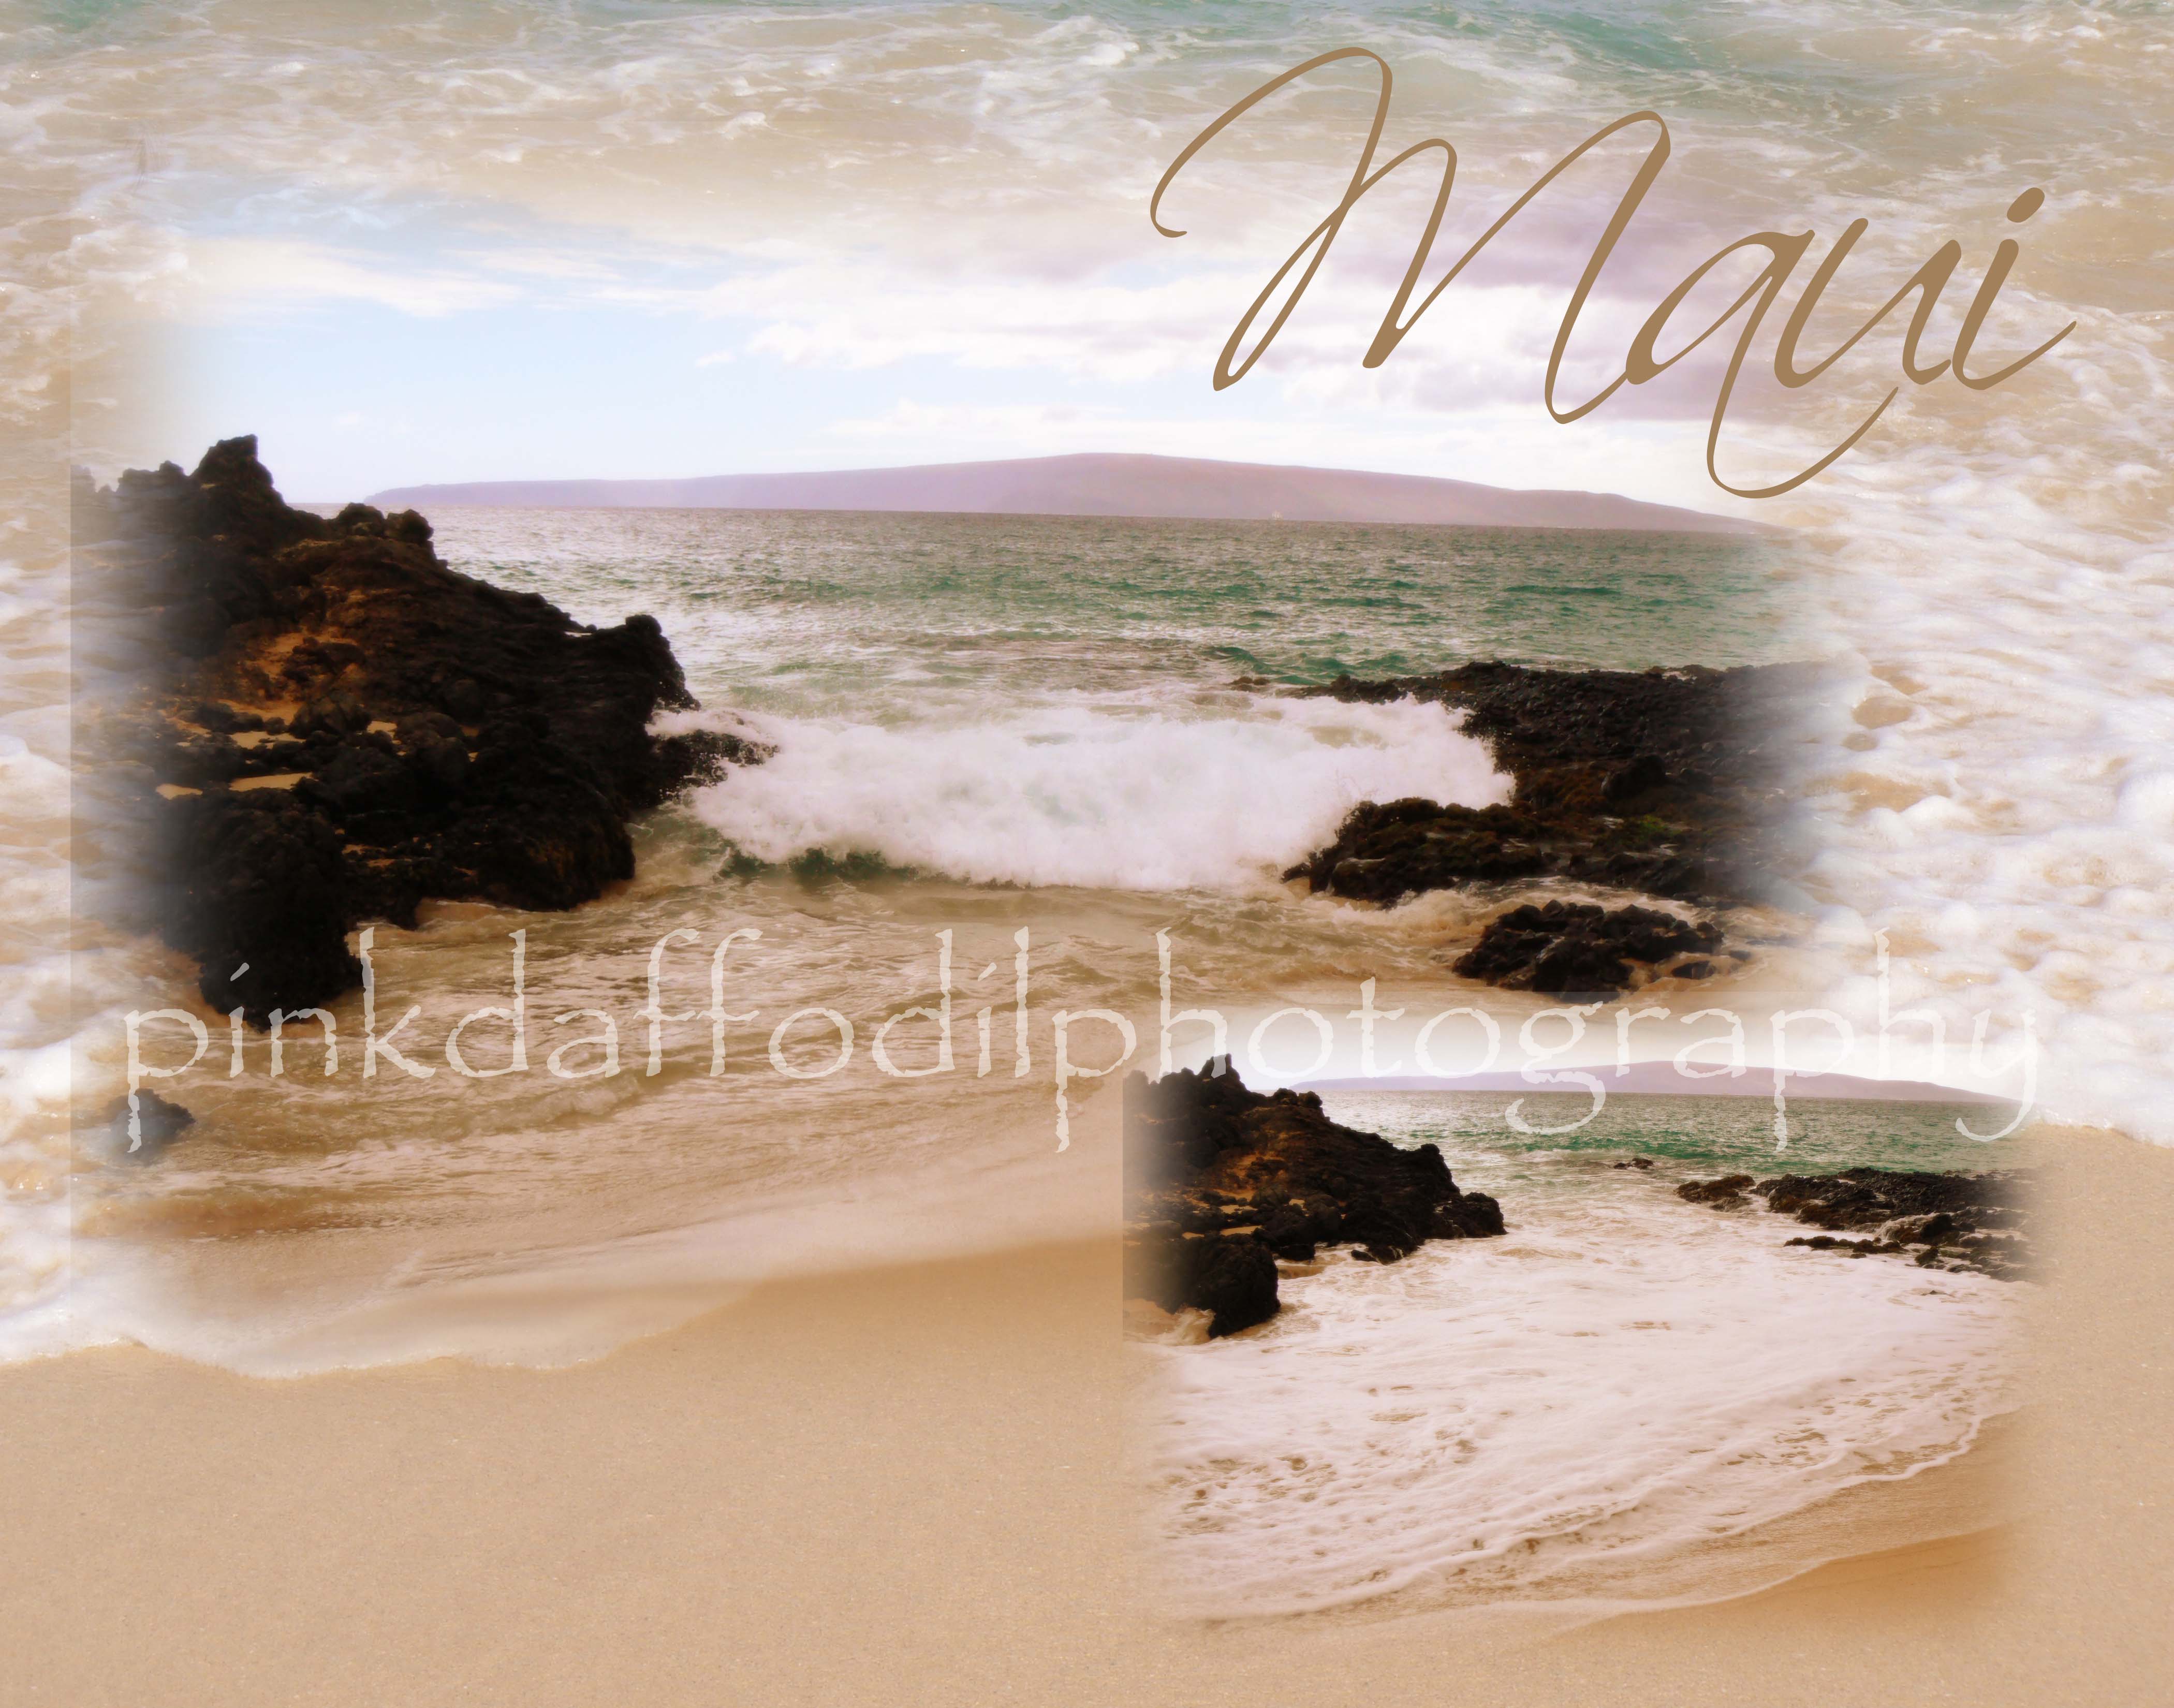 watermark Maui love beach copy copy